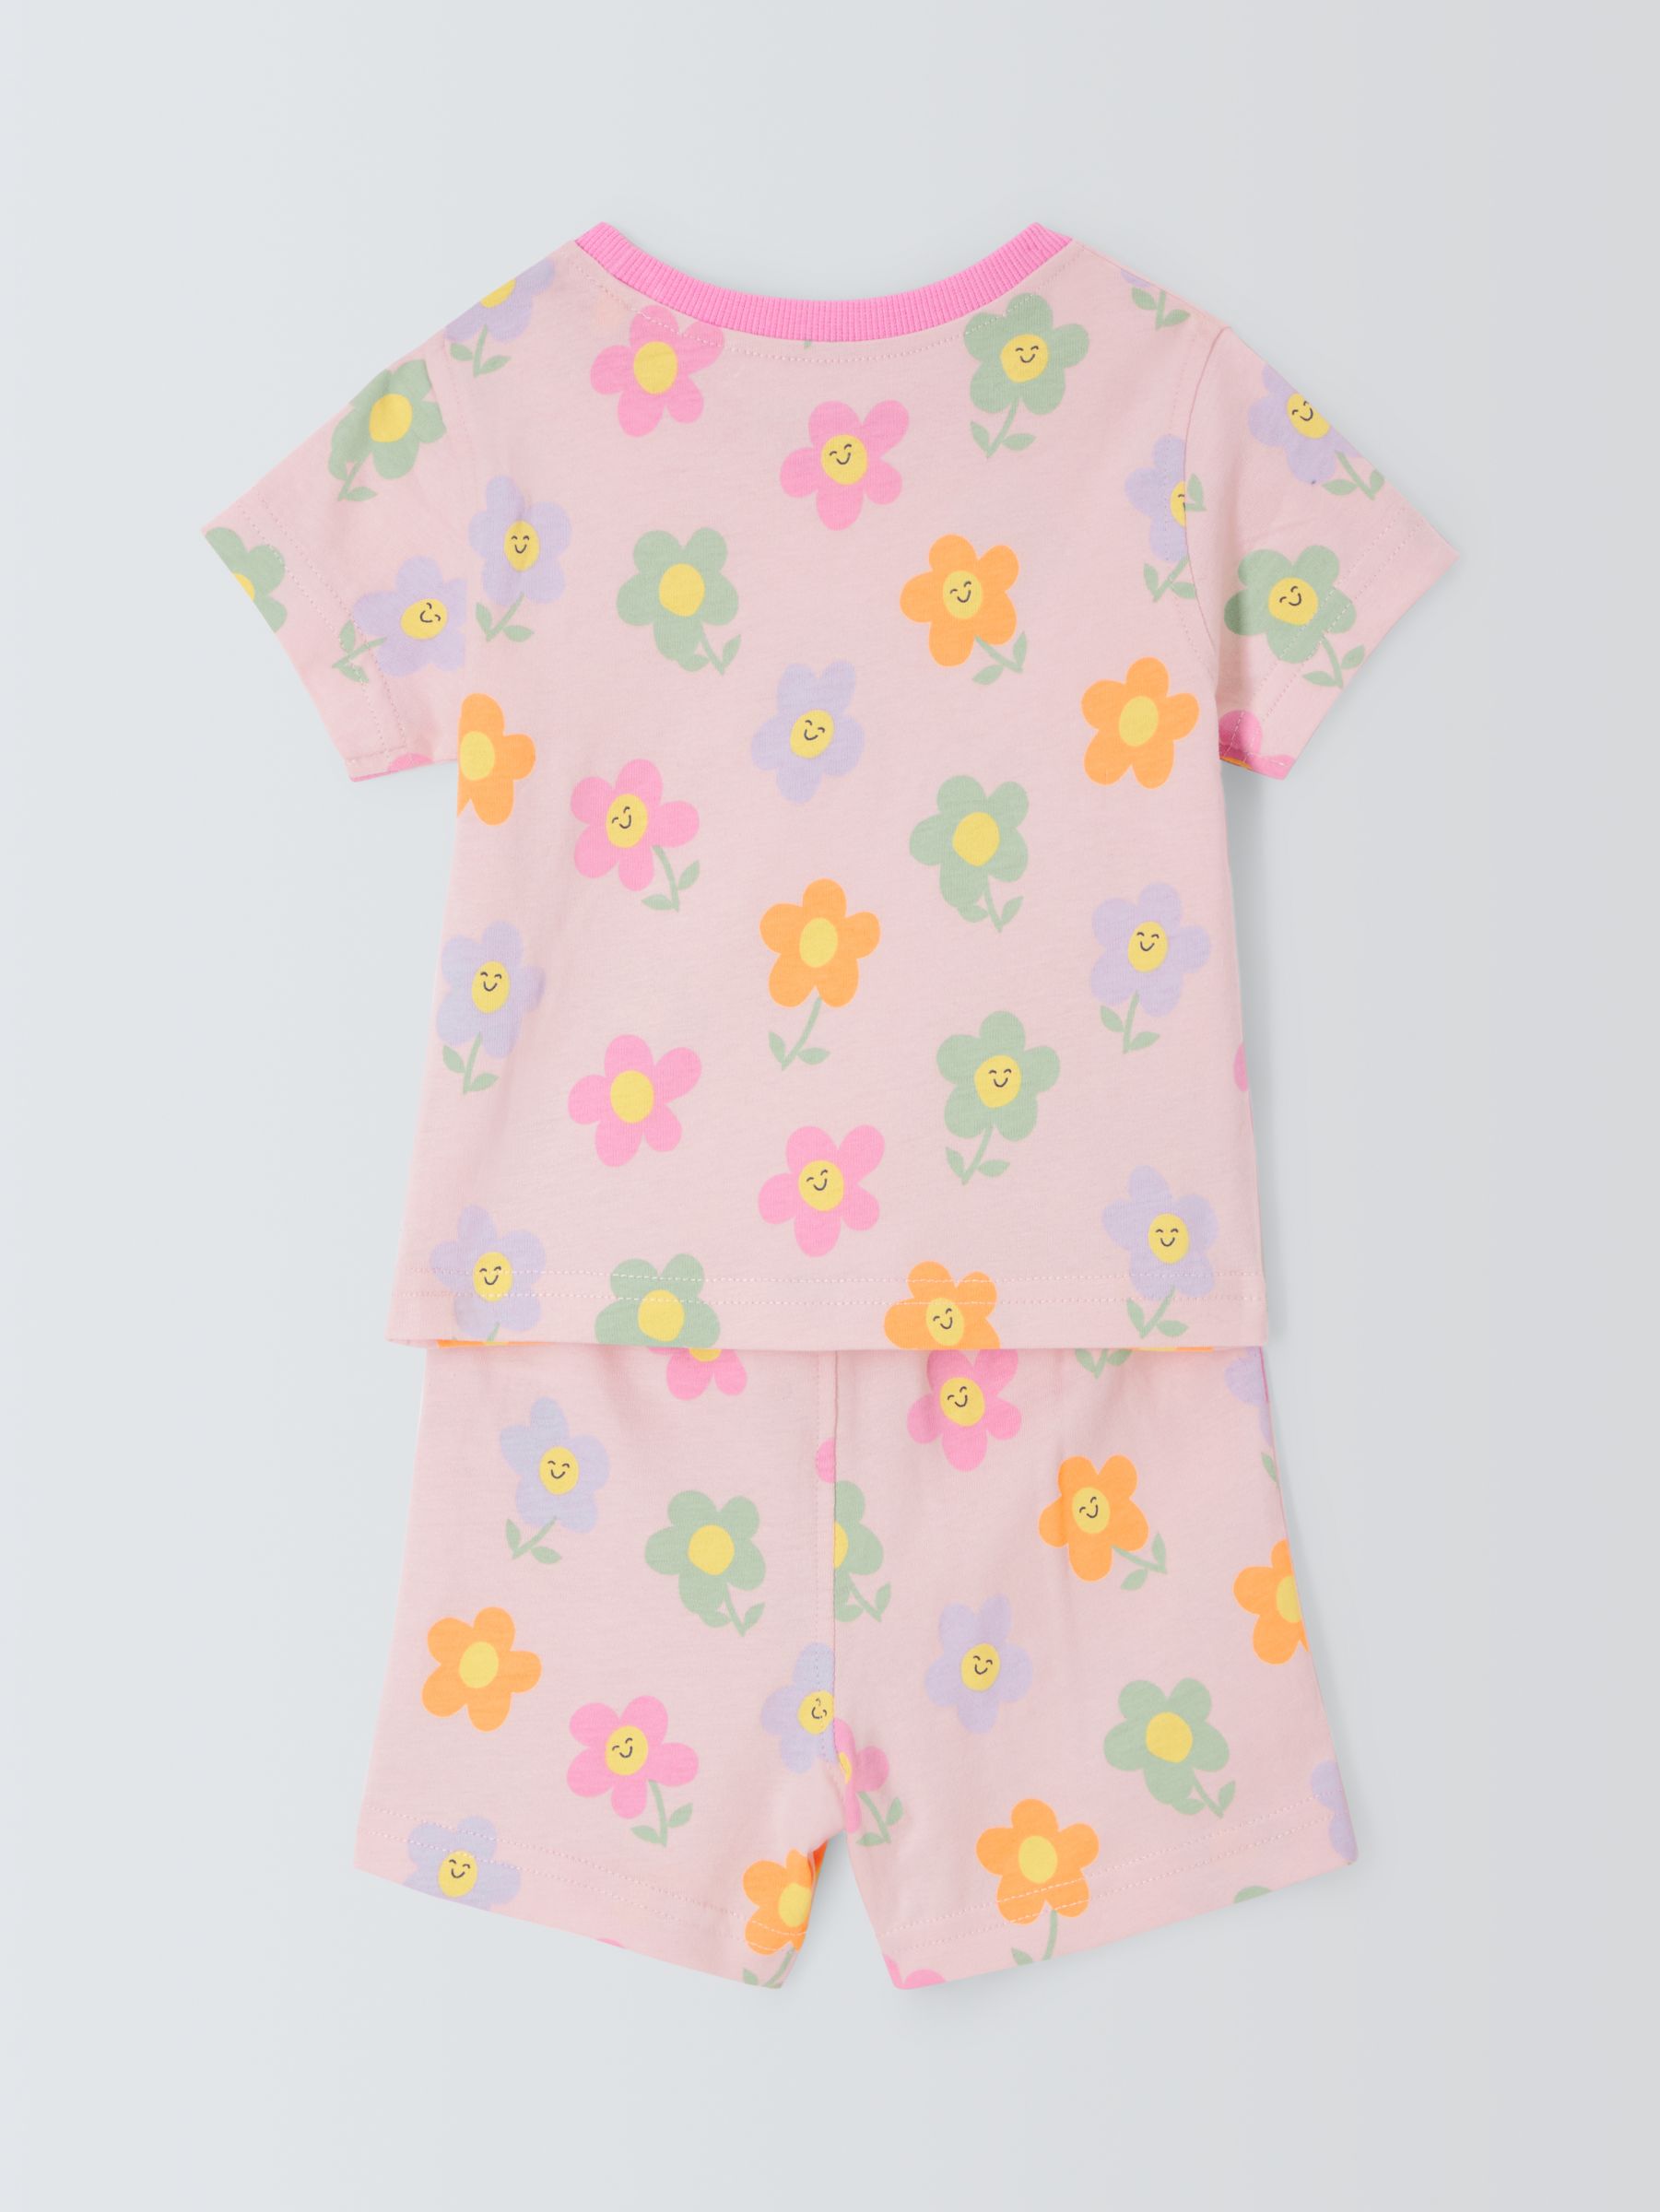 John Lewis ANYDAY Baby Flower Print Shortie Pyjamas, Pink/Multi, 3-4 years